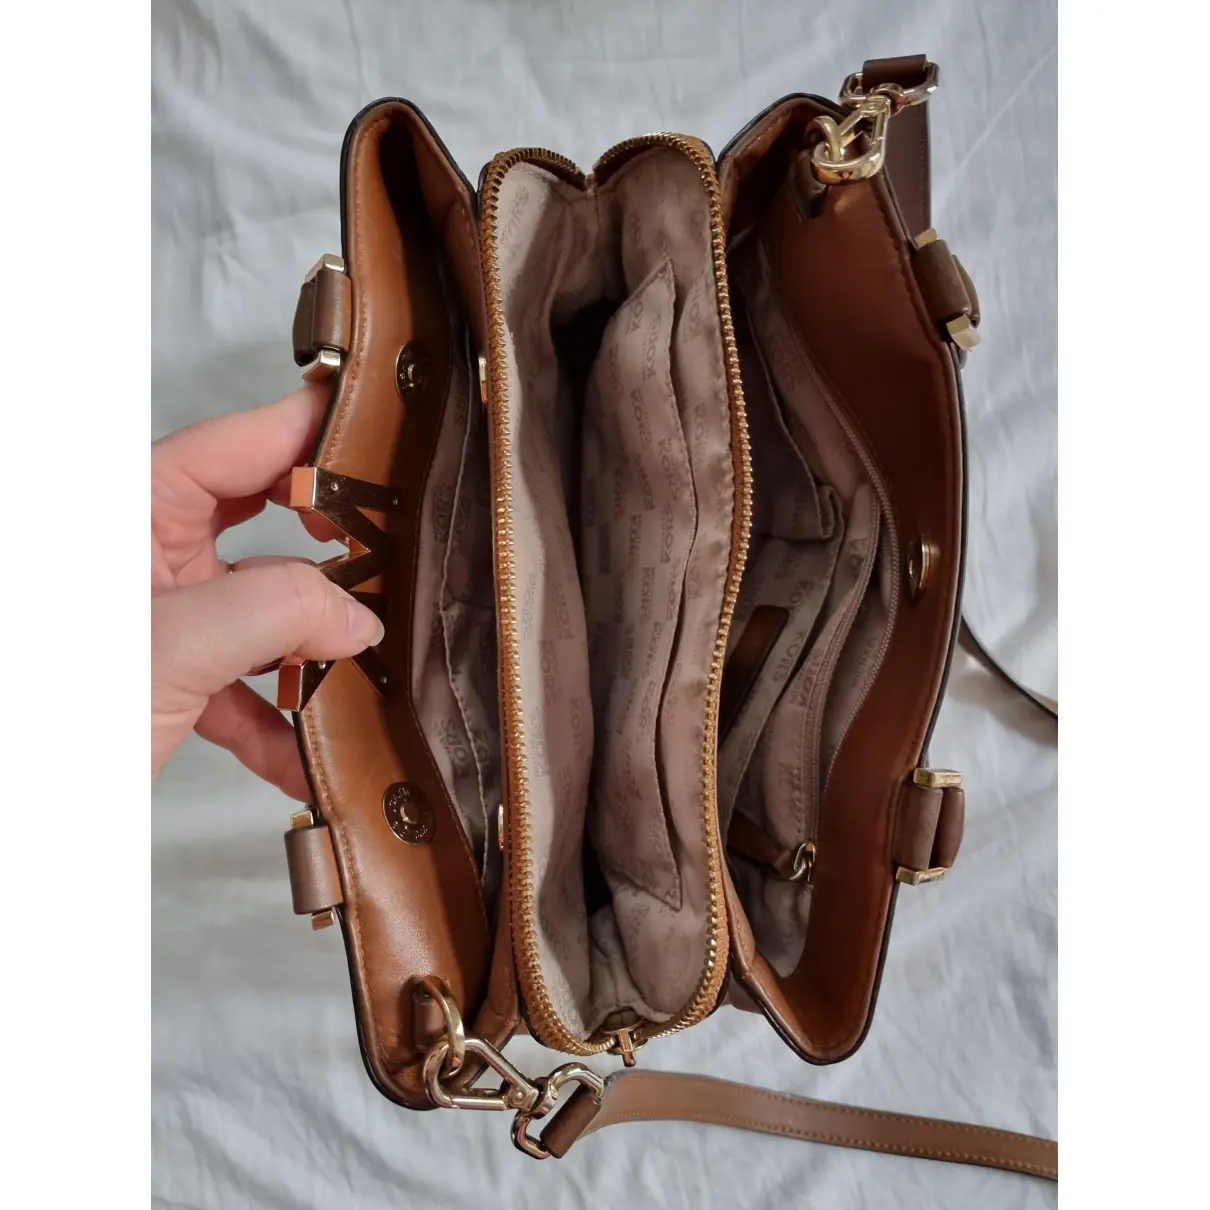 Savannah leather handbag Michael Kors